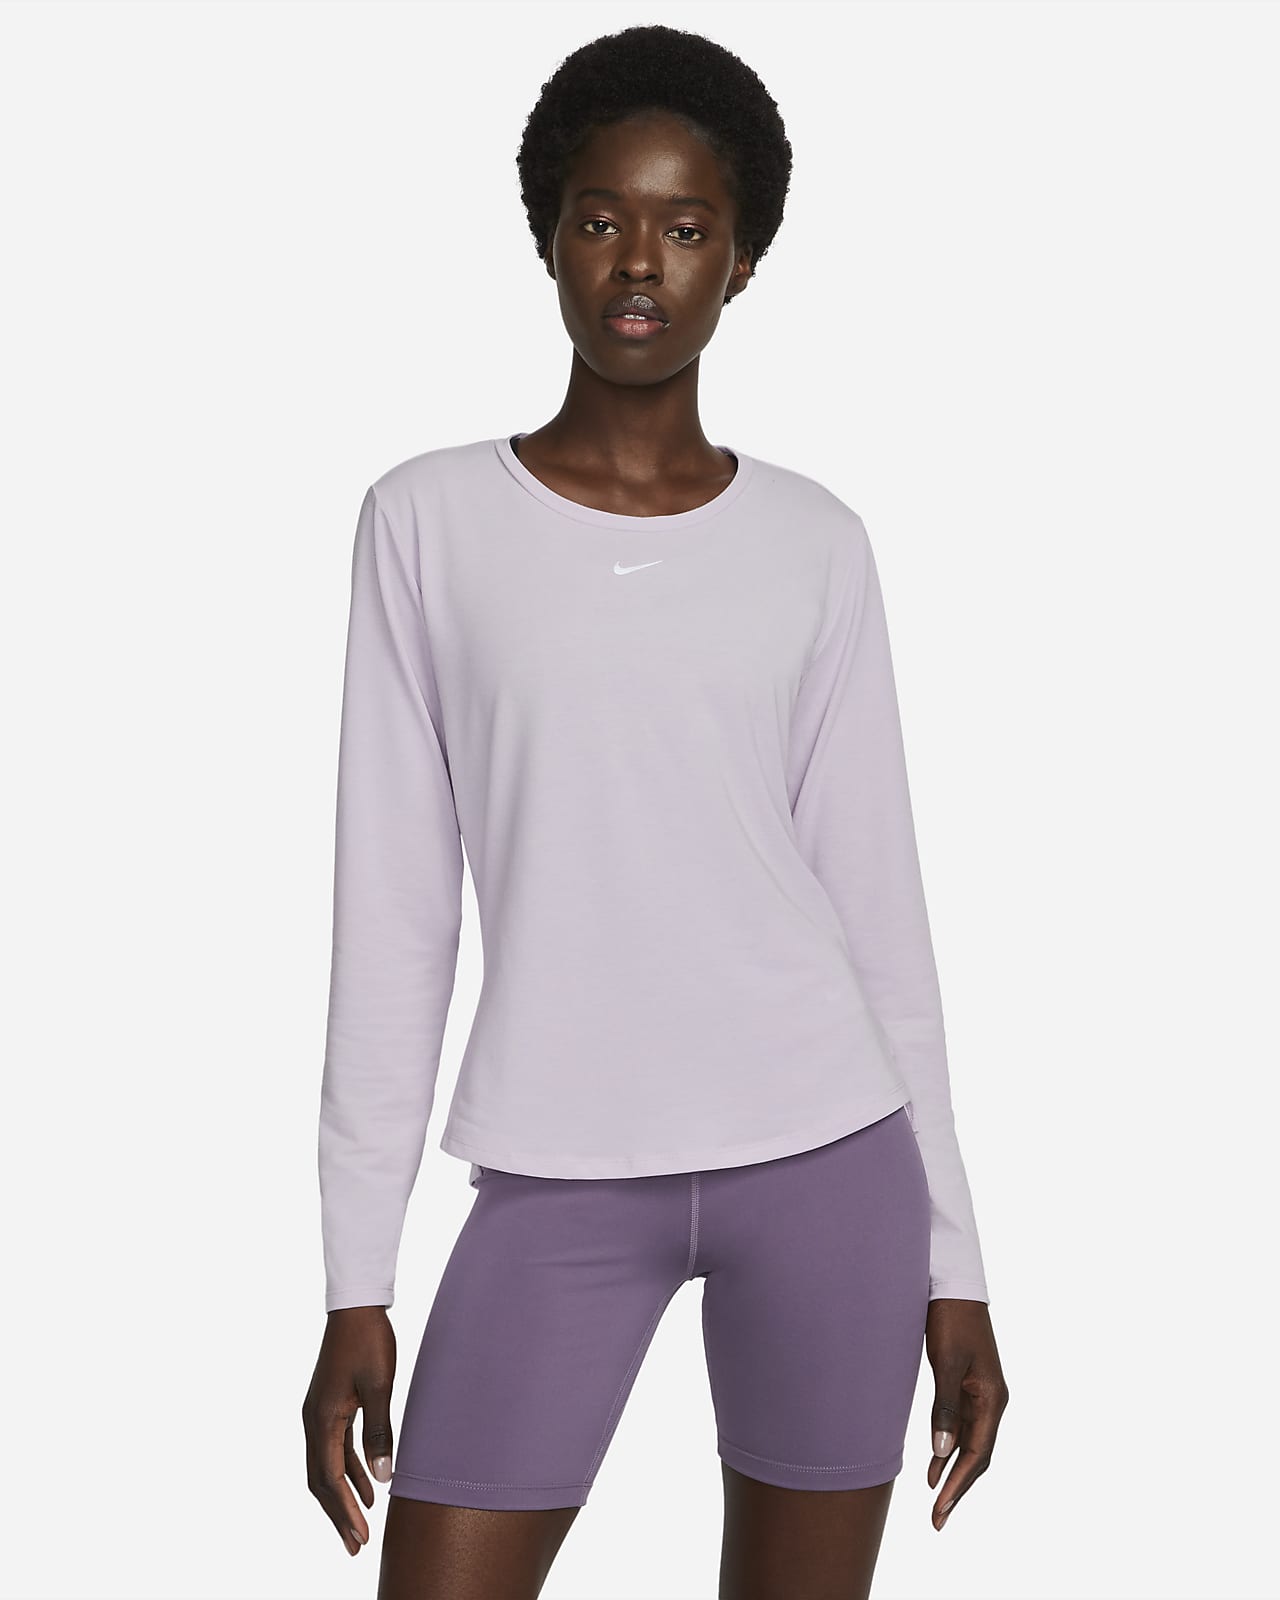 Nike Dri-FIT UV One Luxe Women's Standard Fit Long-Sleeve Top. Nike.com